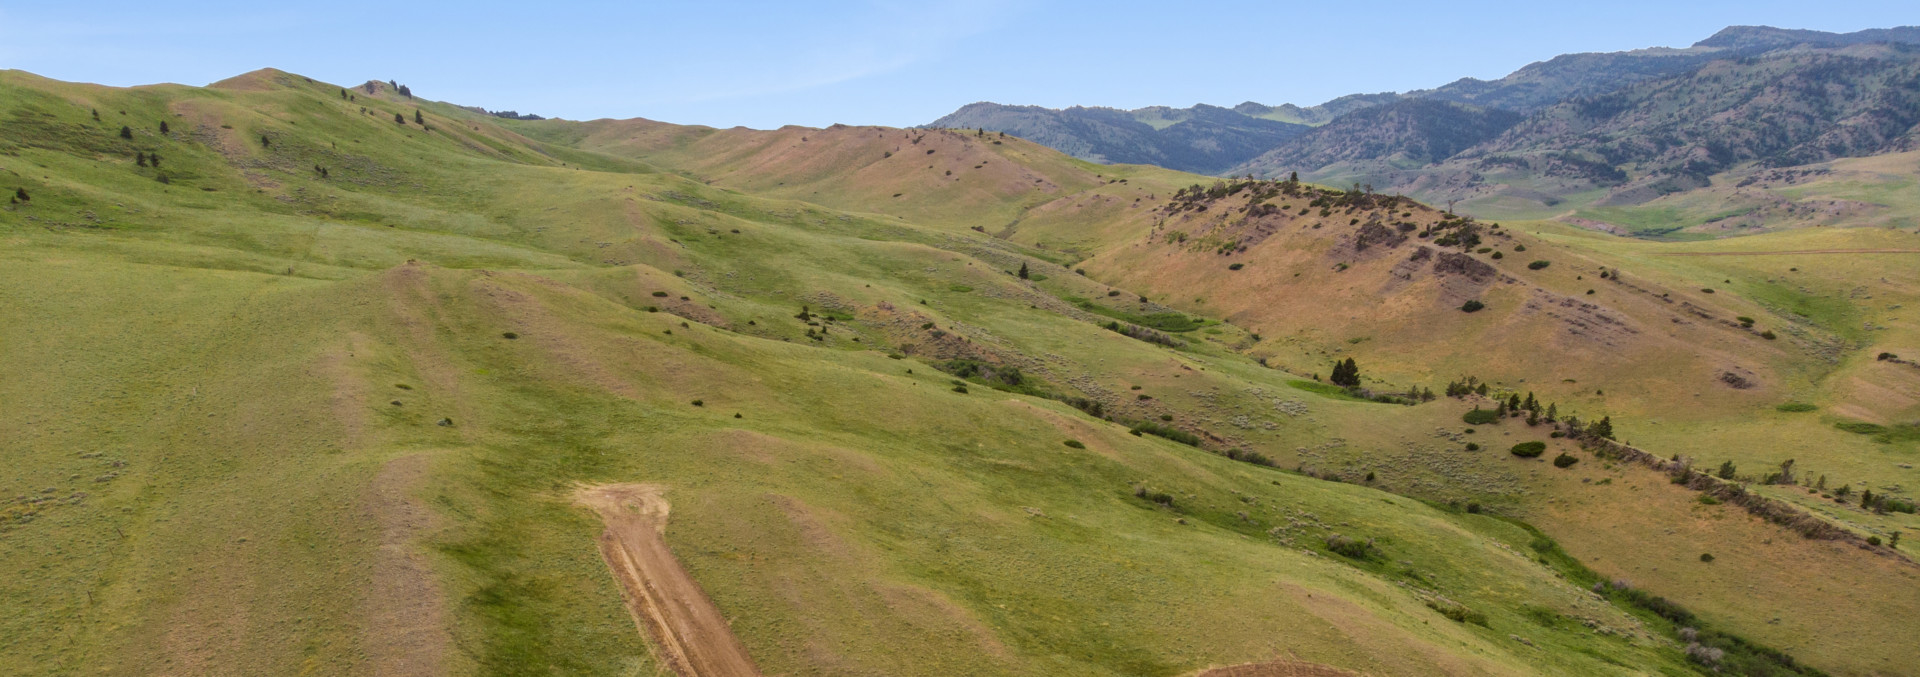 montana land for sale bozeman pass ranch tract 4